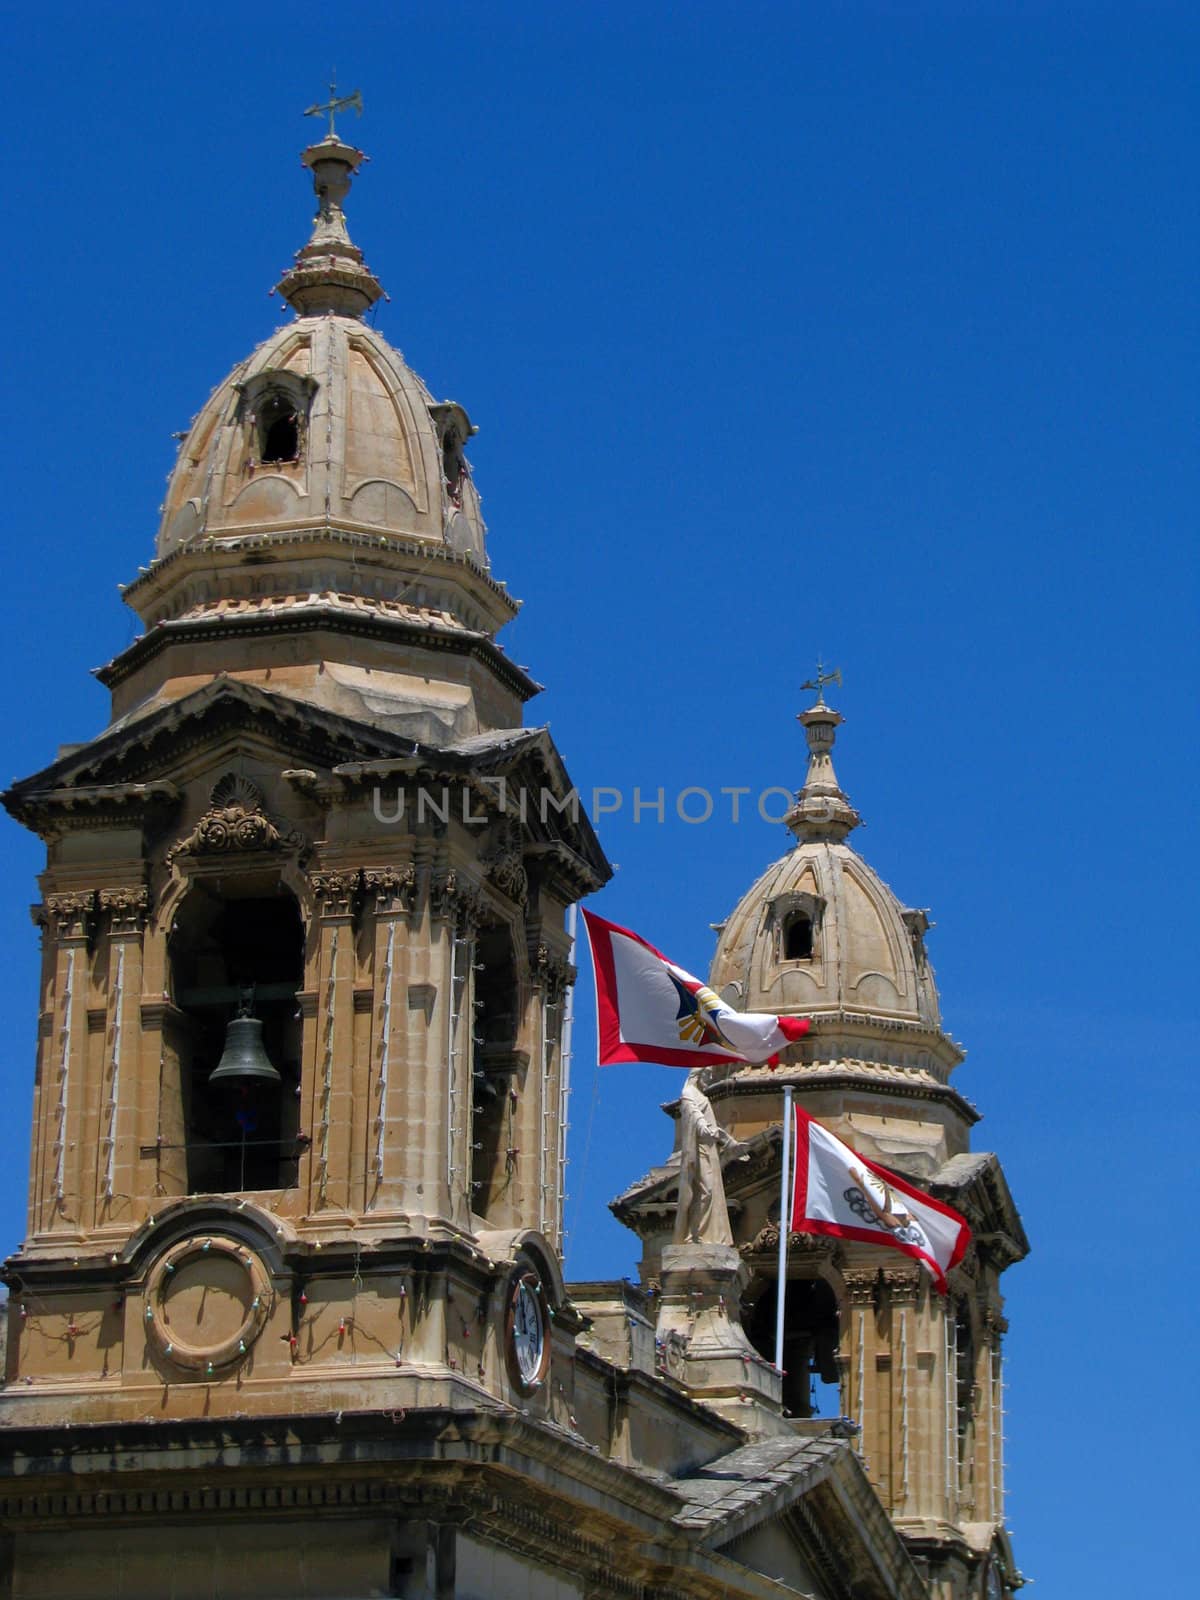 The belfries of the parish church of Marsa, Malta.